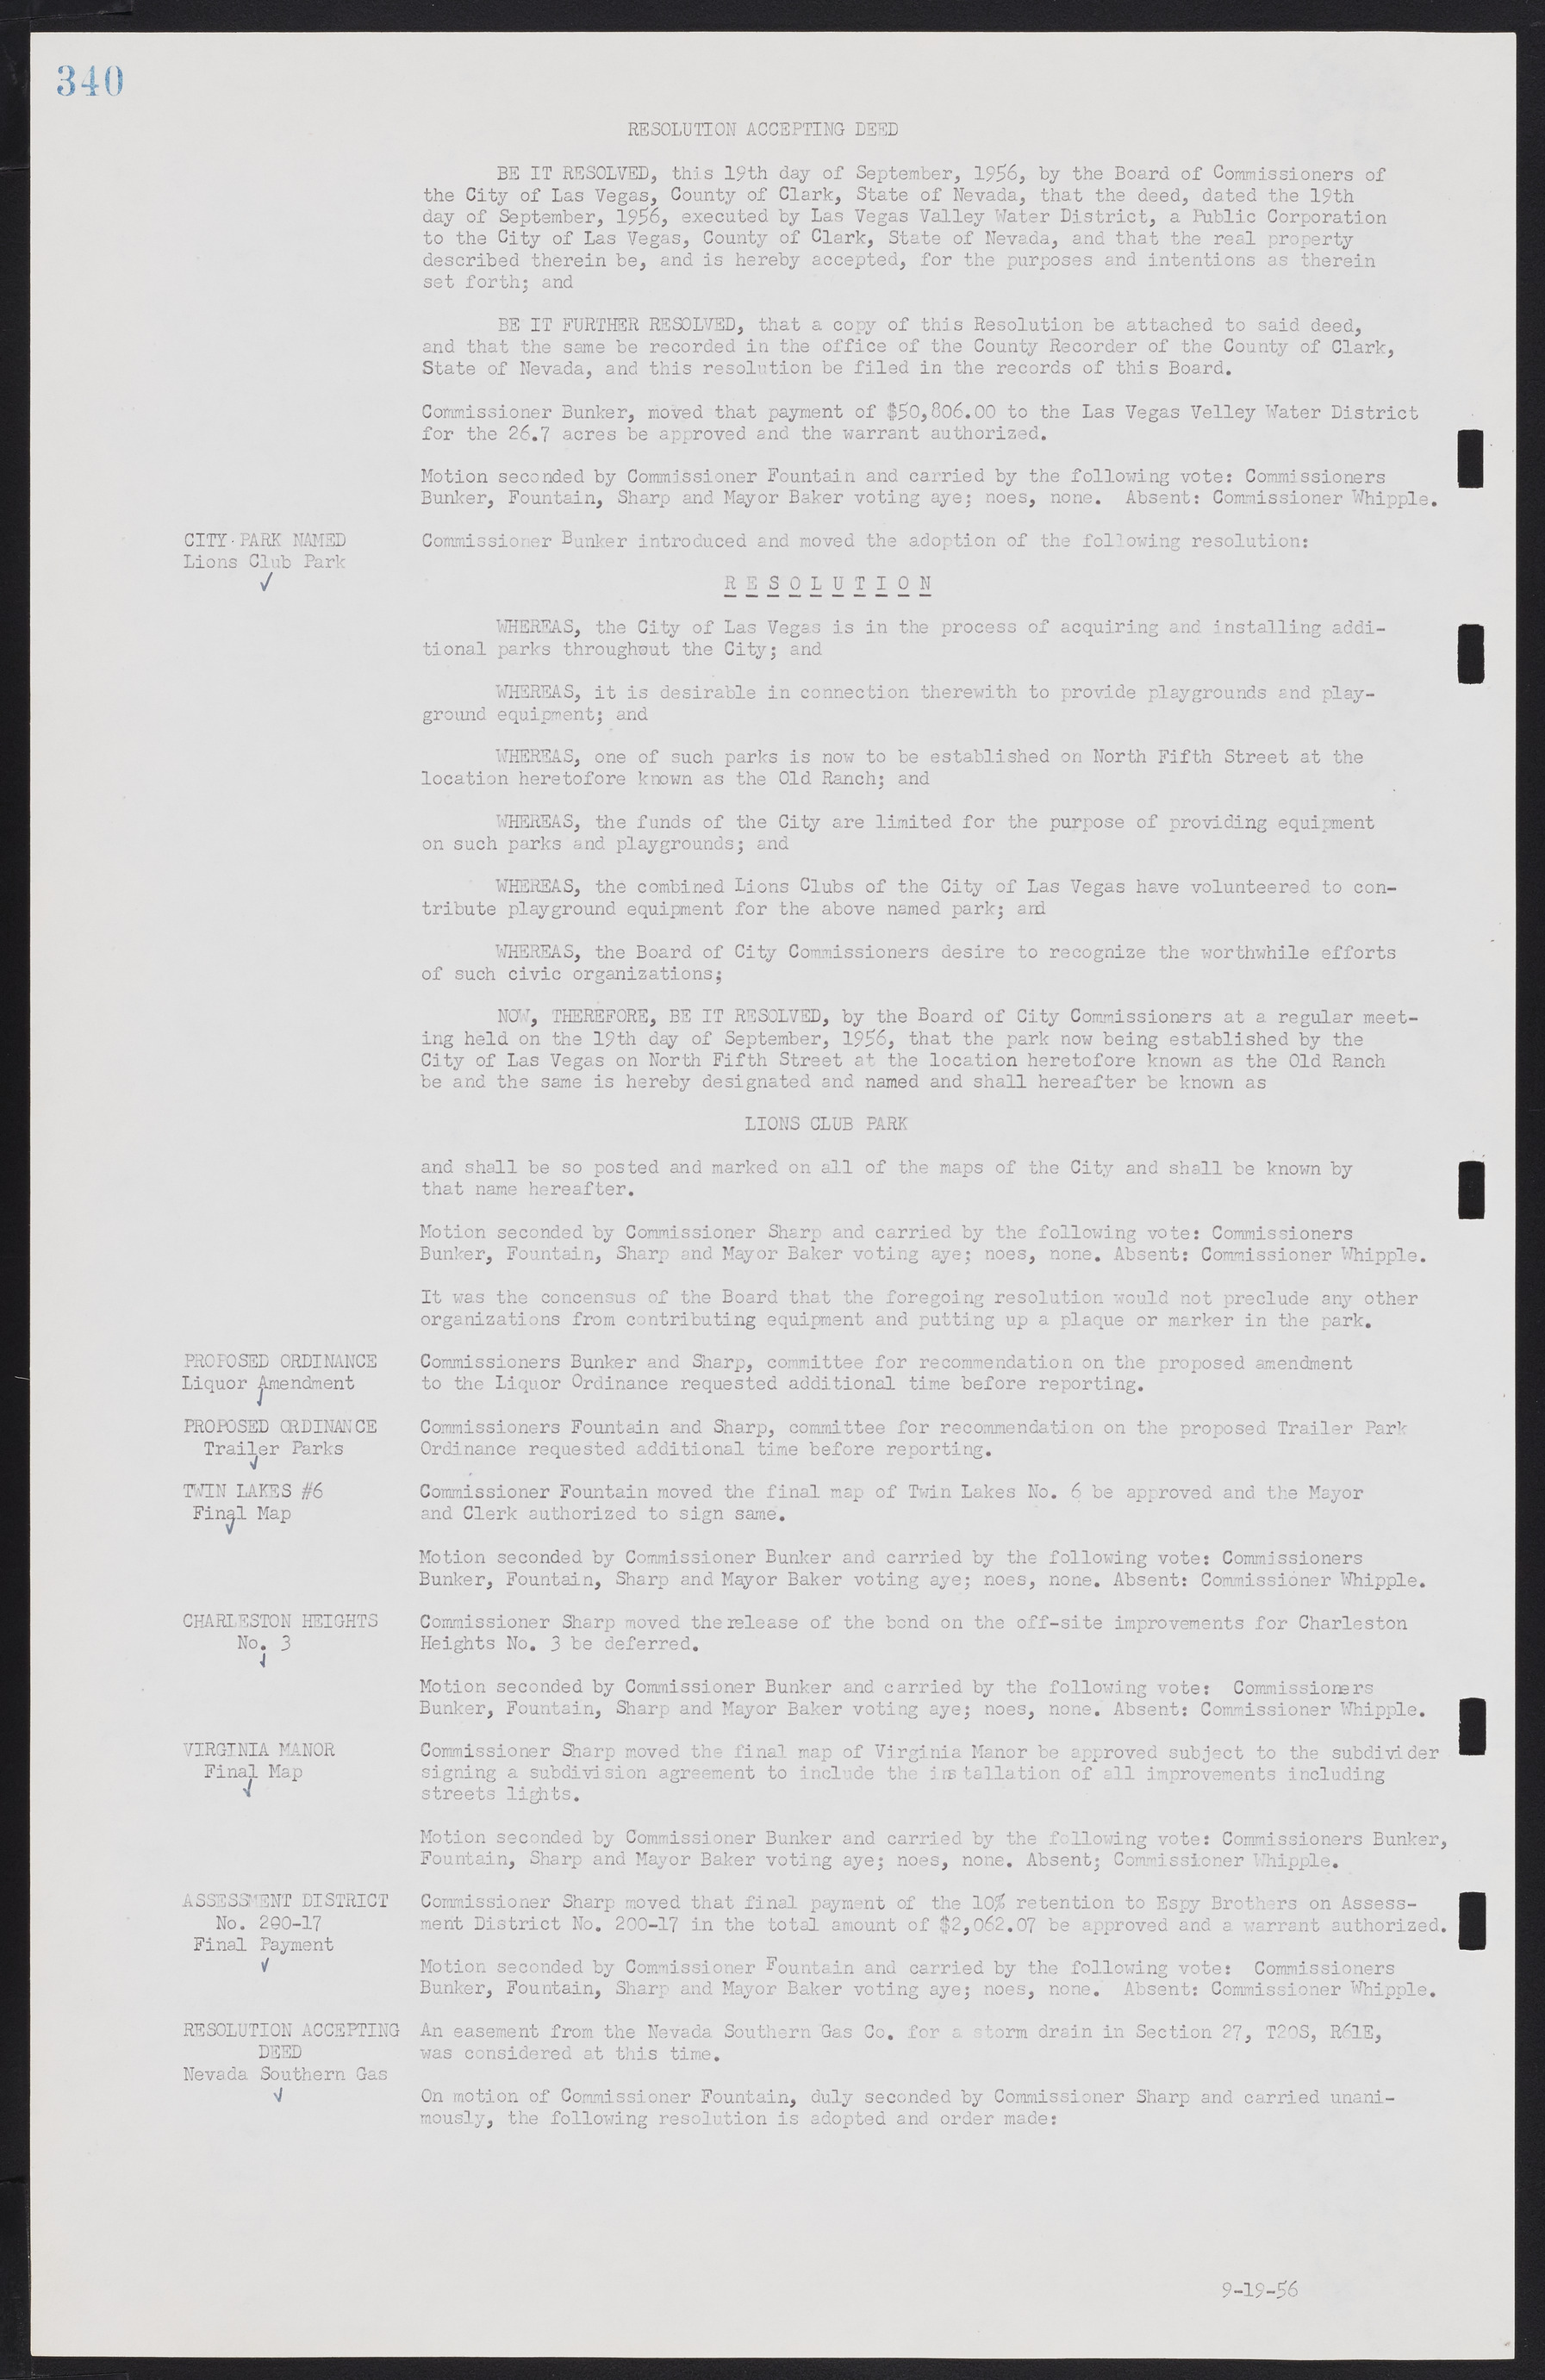 Las Vegas City Commission Minutes, September 21, 1955 to November 20, 1957, lvc000010-360